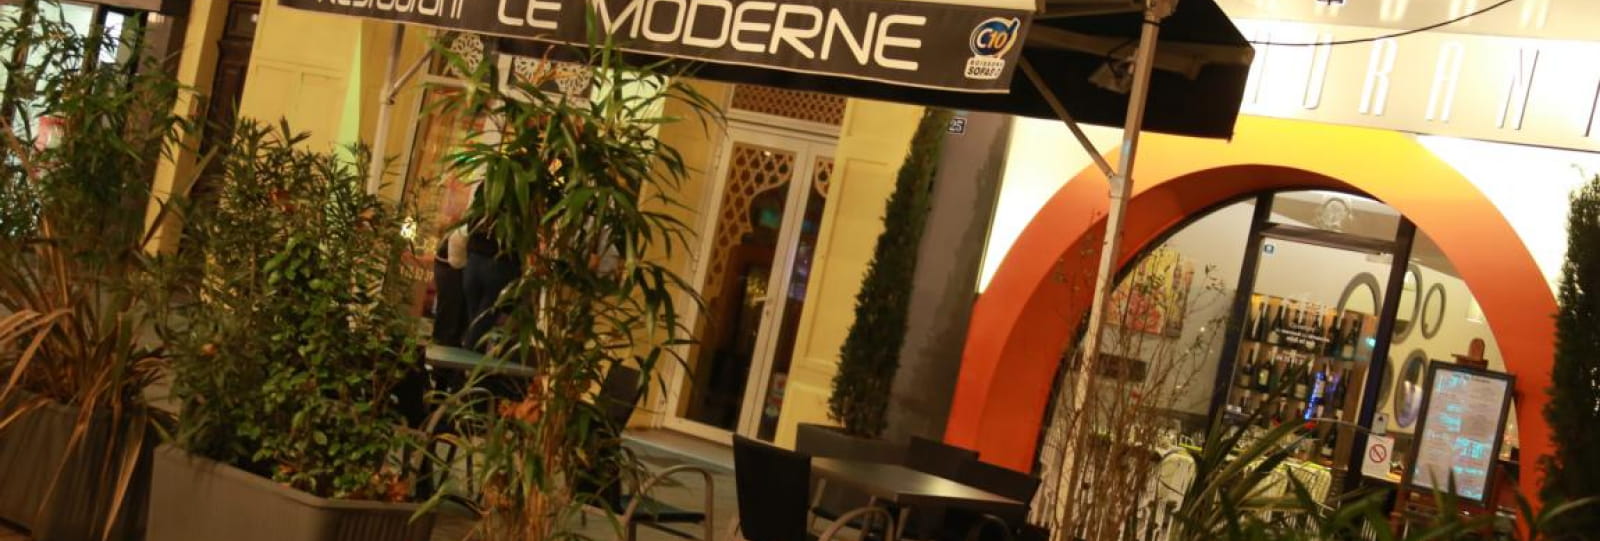 Le Moderne restaurant